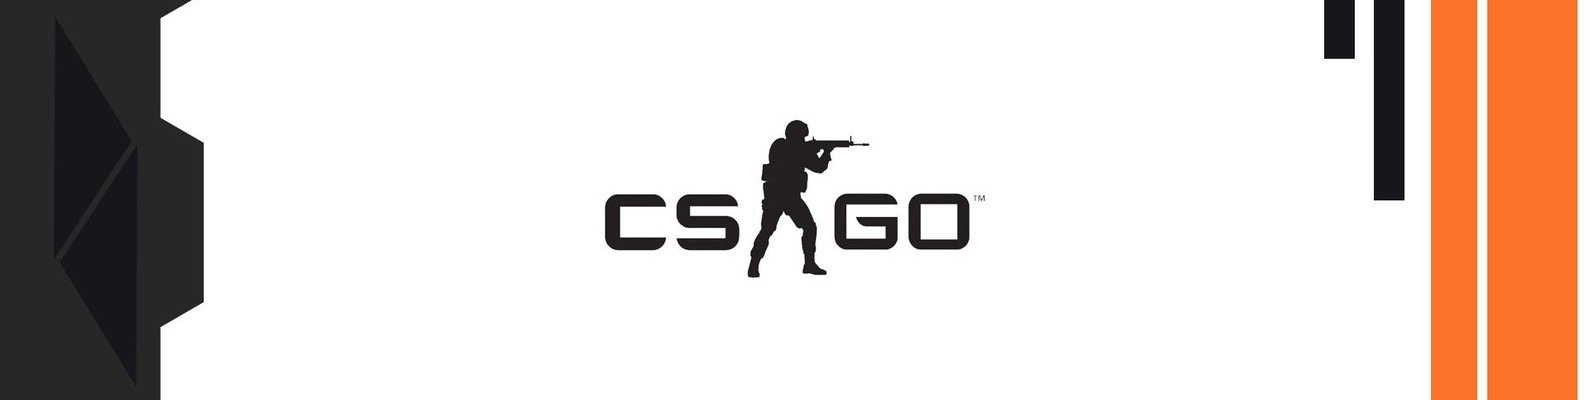 Тексты кс го. КС надпись. CS go надпись. Логотип КС го. Counter-Strike: Global Offensive надпись.